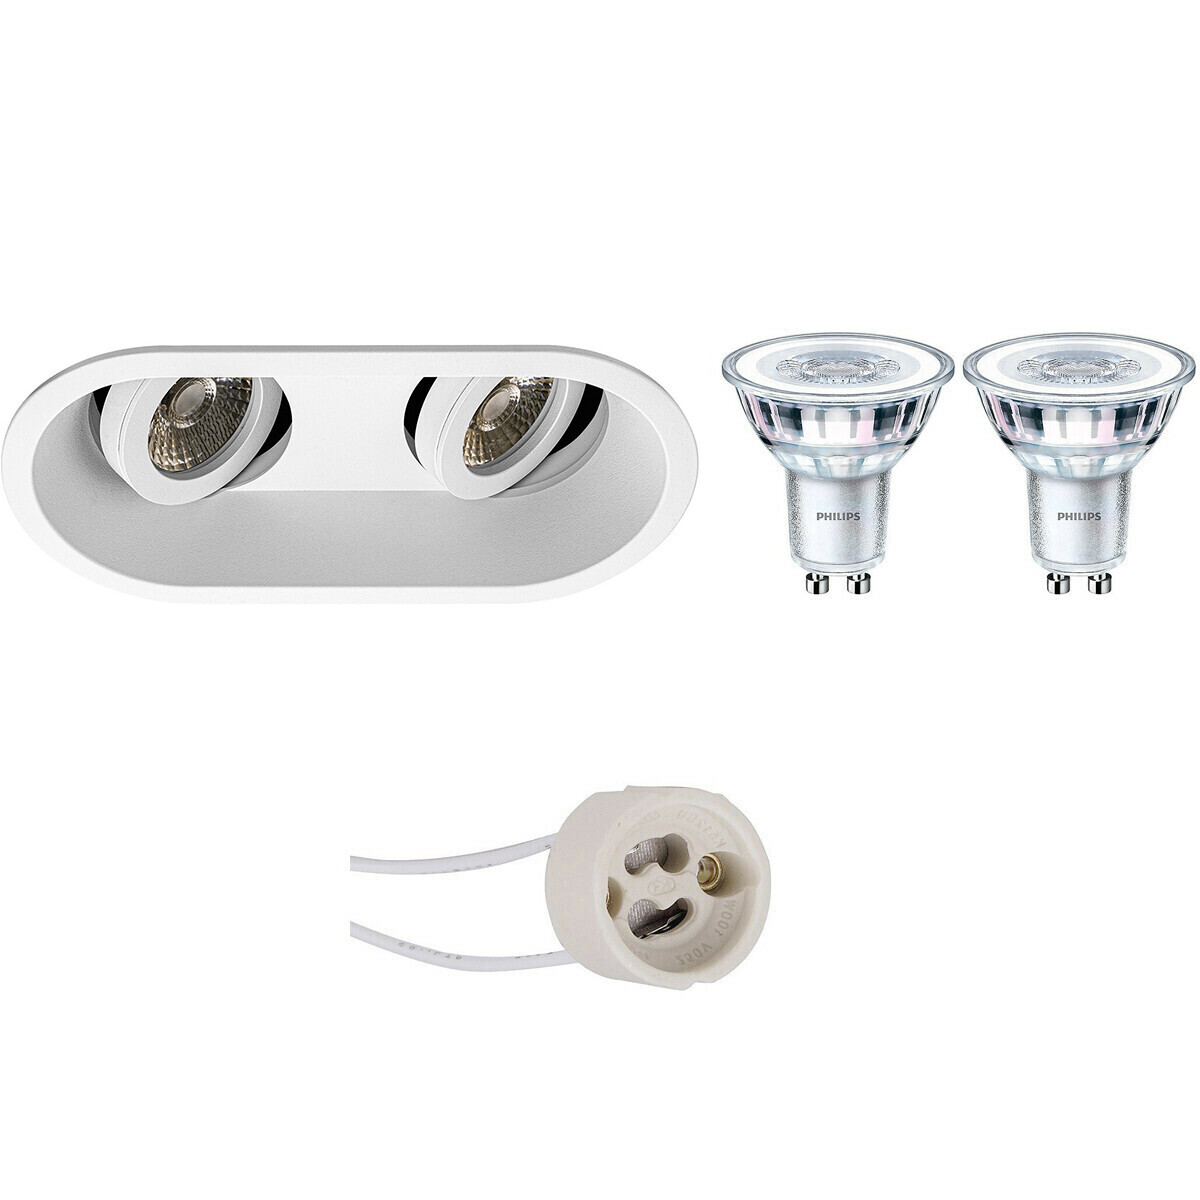 BES LED LED Spot Set - Pragmi Zano Pro - GU10 Fitting - Inbouw Ovaal Dubbel - Mat Wit - Kantelbaar - 185x93mm - Philips - CorePro 840 36D - 4W - Natuurlijk Wit 4000K - Dimbaar